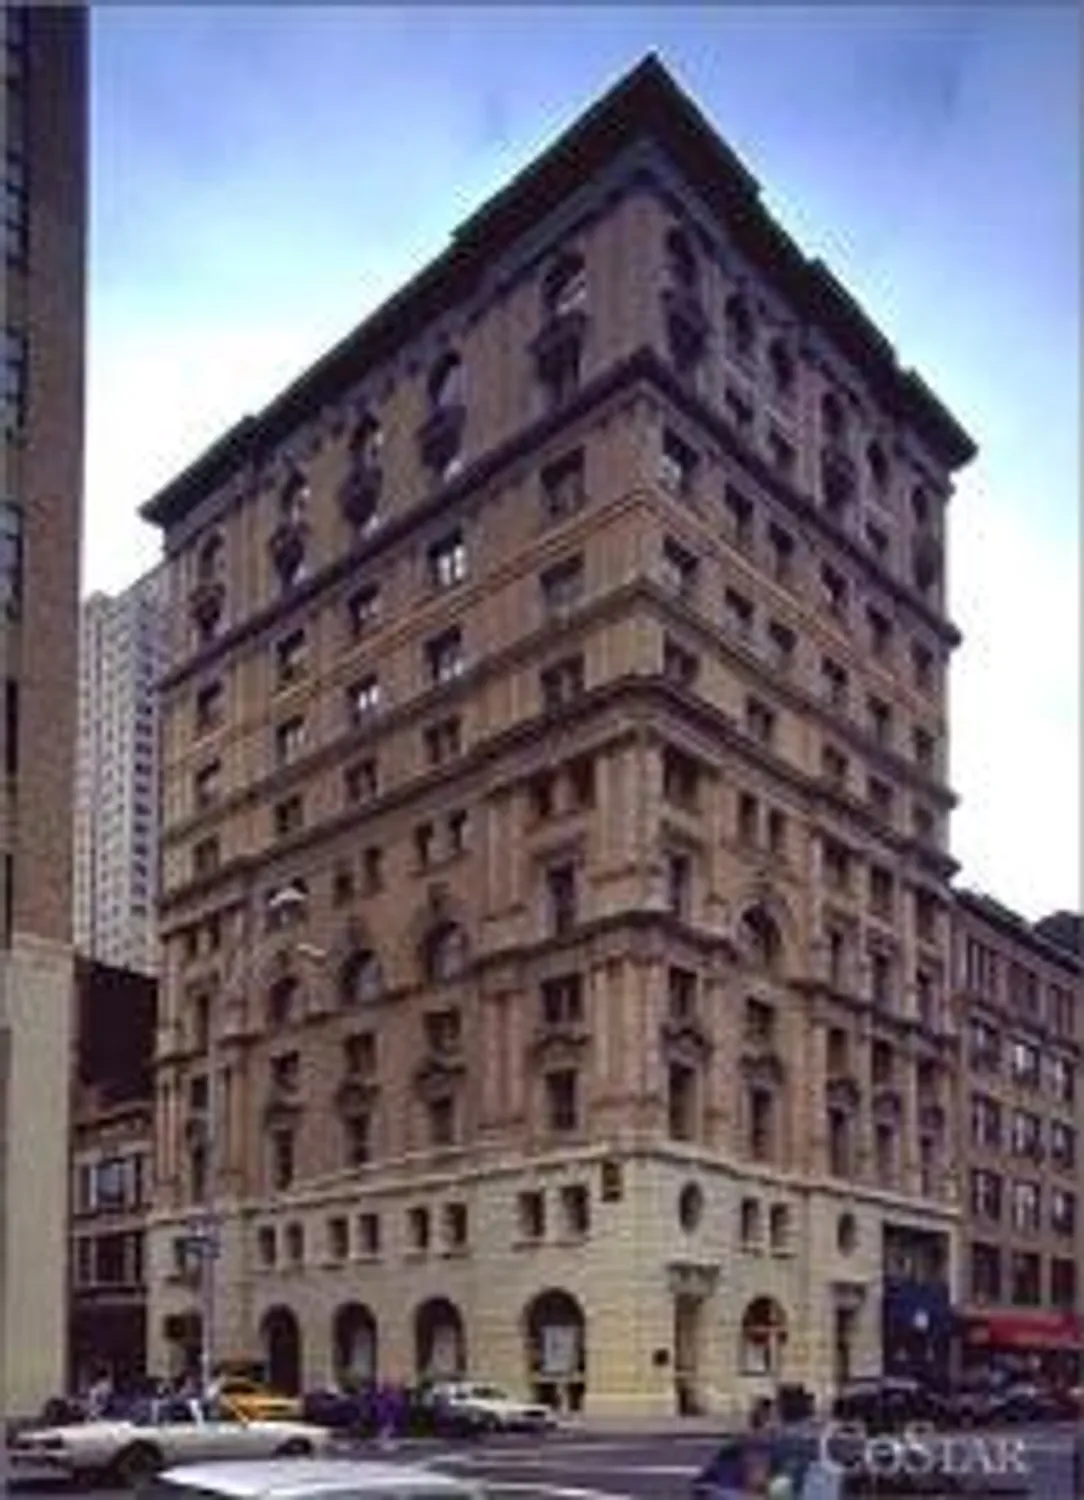 Powell Building